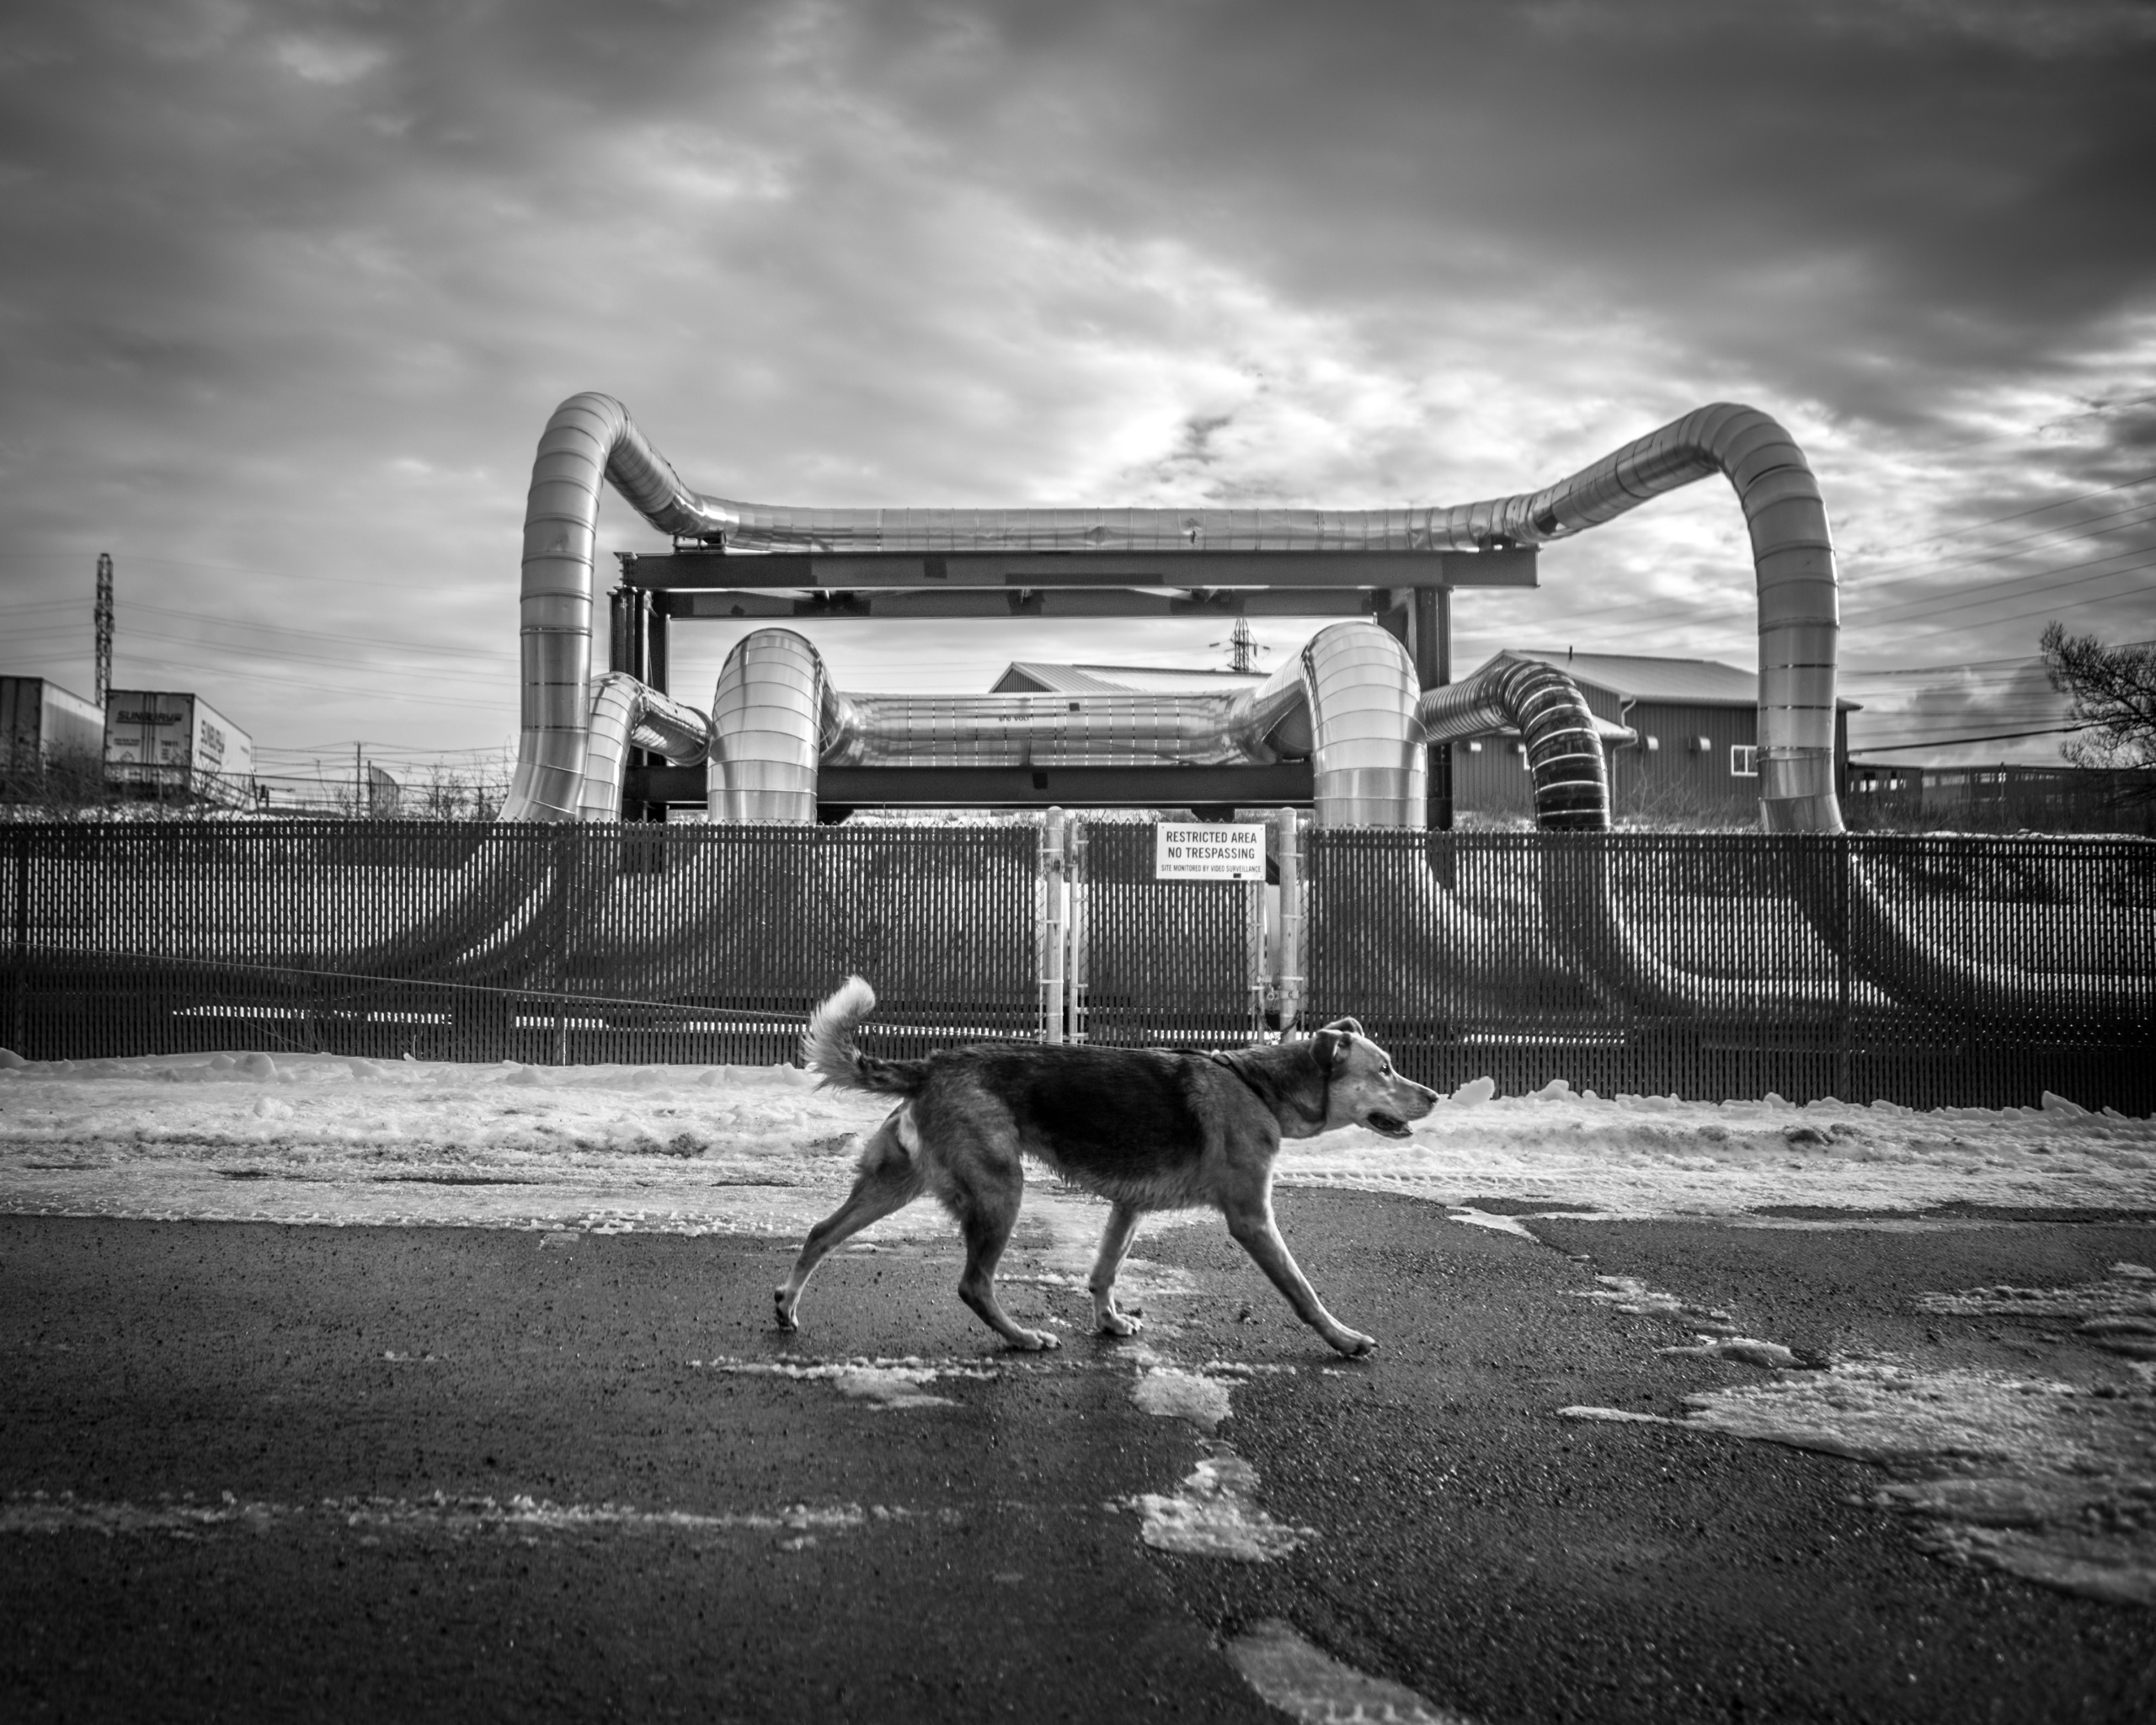     Chris Donovan, Dog with Pipeline, 2019, inkjet print. Courtesy of the artist

